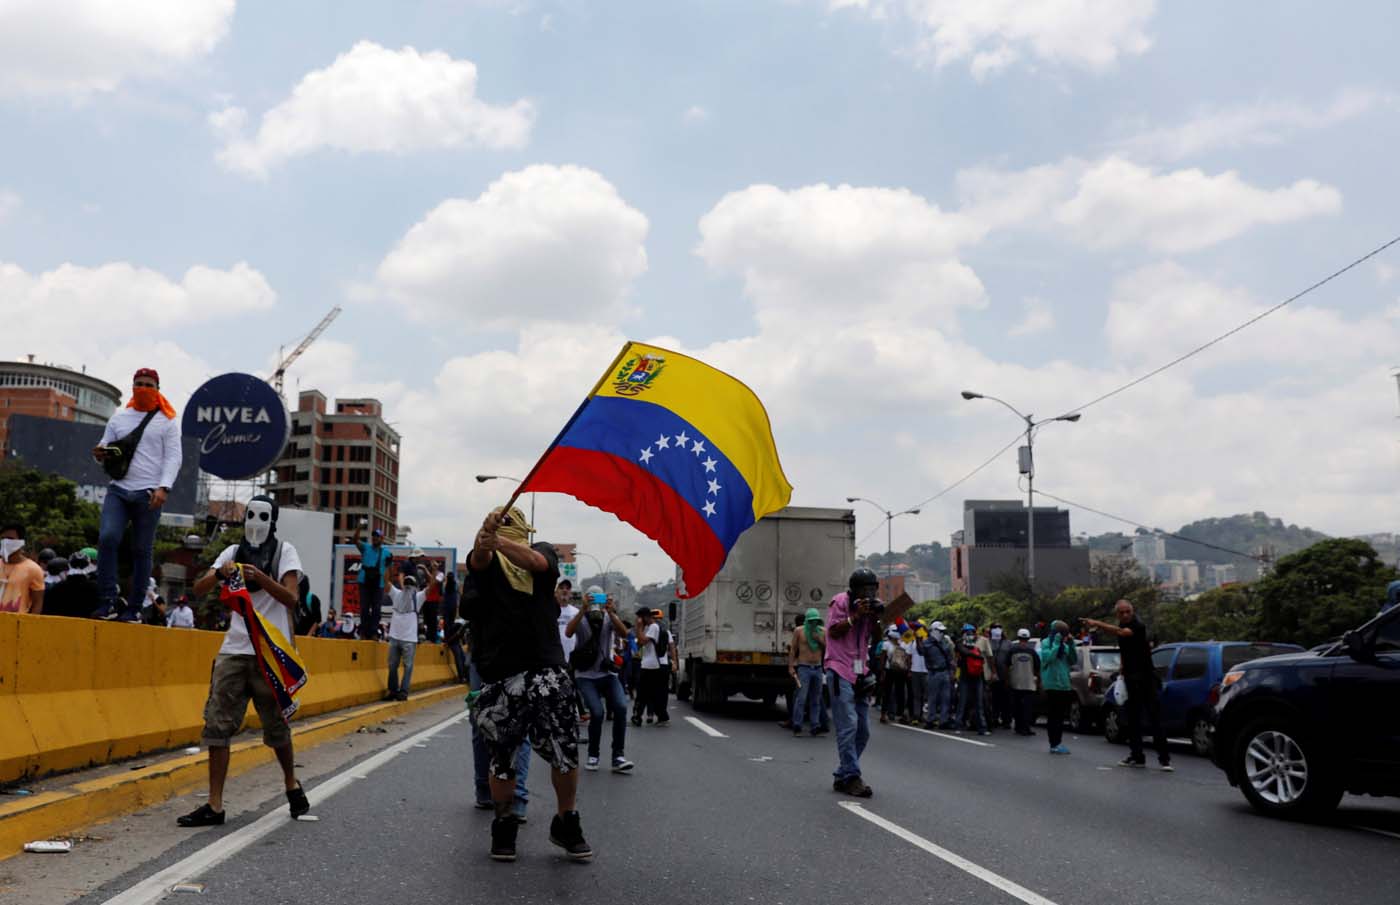 Demonstrators rally against Venezuela's President Nicolas Maduro's government in Caracas, Venezuela, April 10, 2017. REUTERS/Carlos Garcia Rawlins